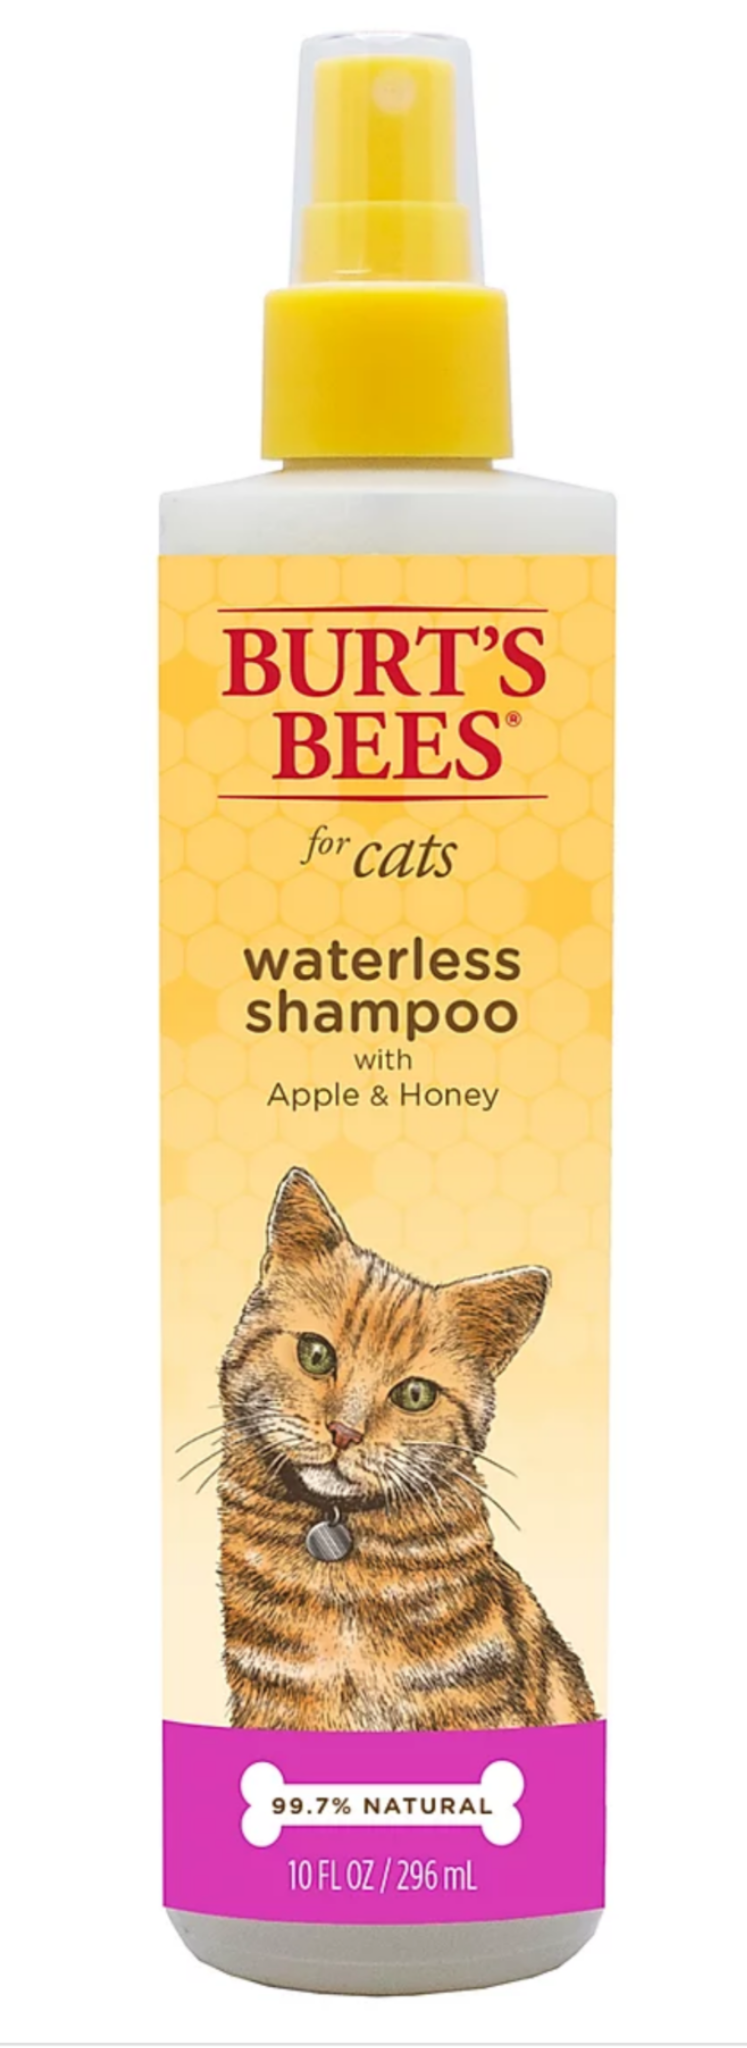 Burt's Bees Waterless Shampoo For Cats
With Apple & Honey